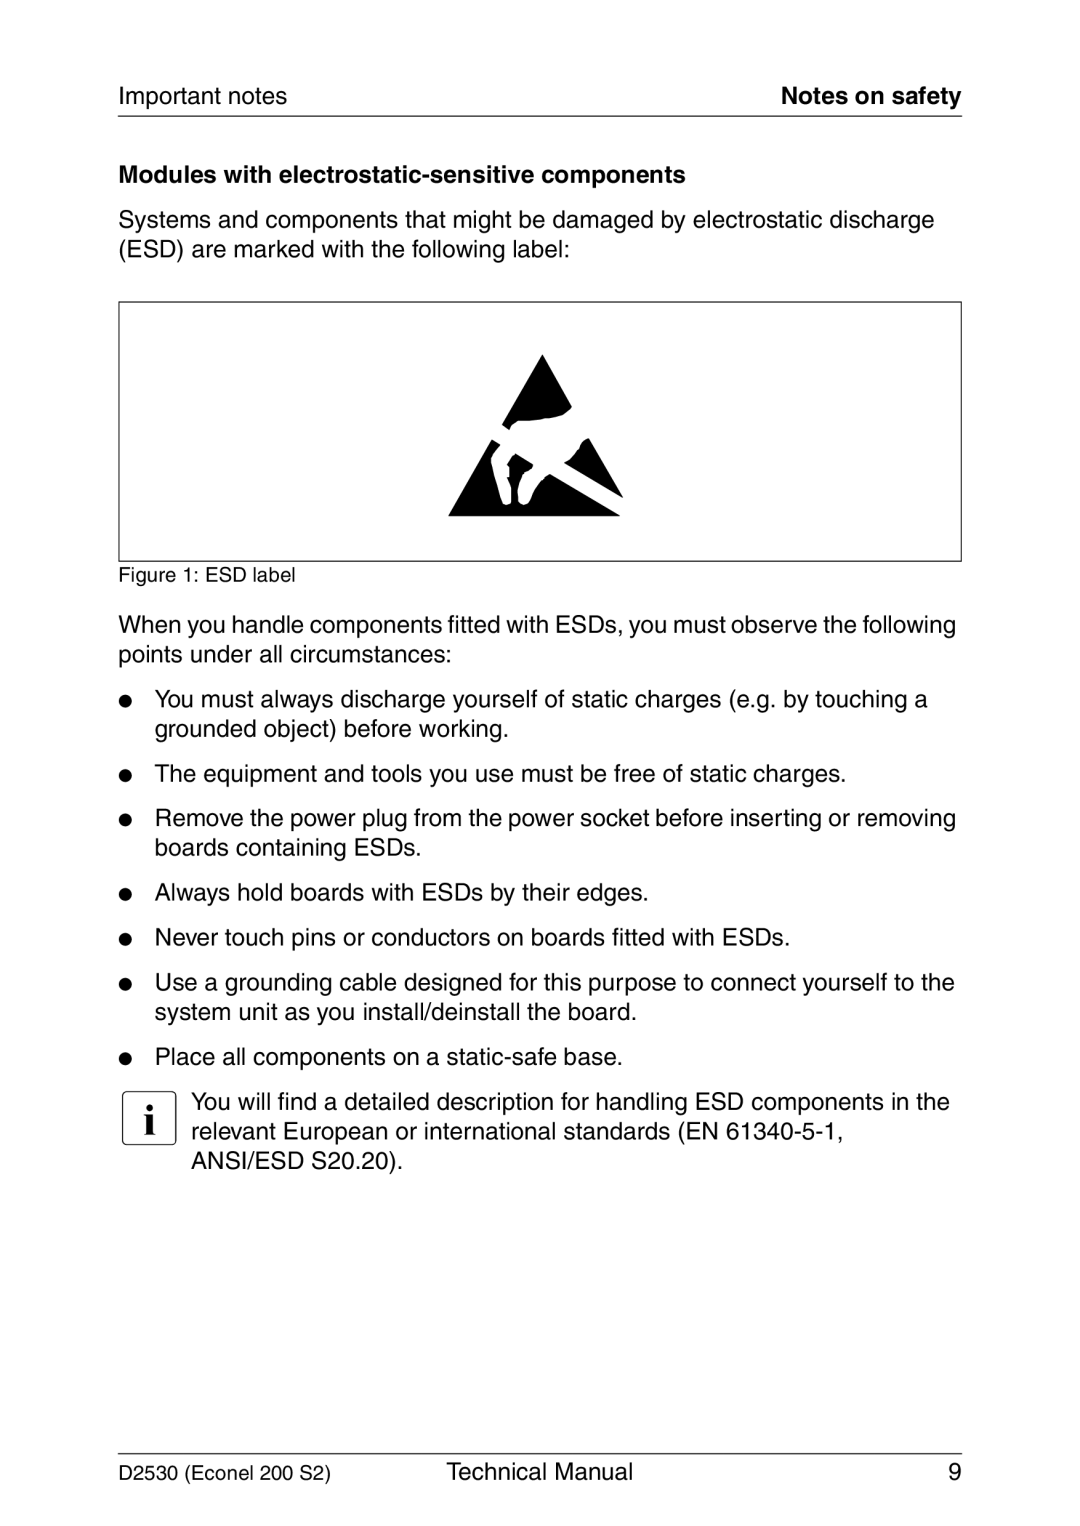 Fujitsu D2530 technical manual ESD label 